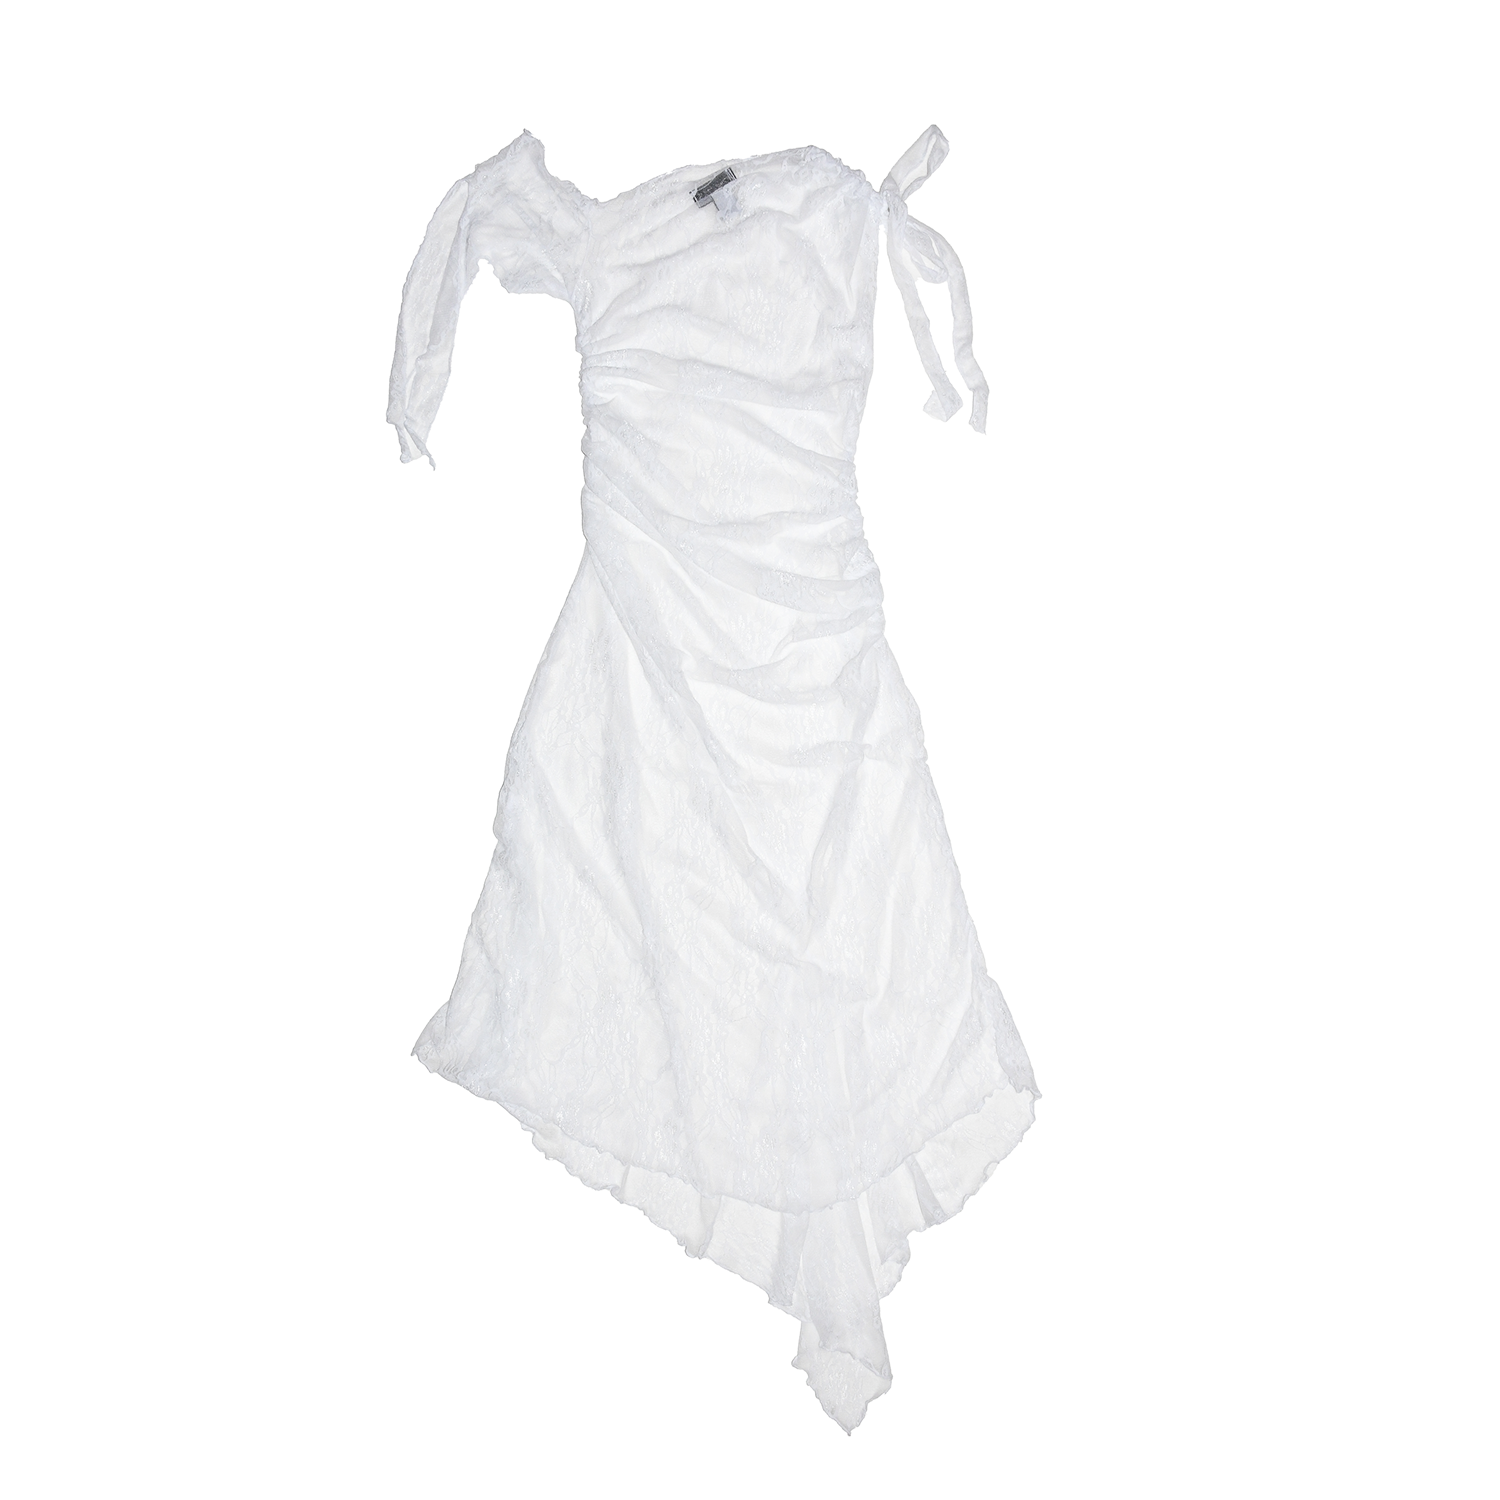 OATS - Summer Dress - White Lace